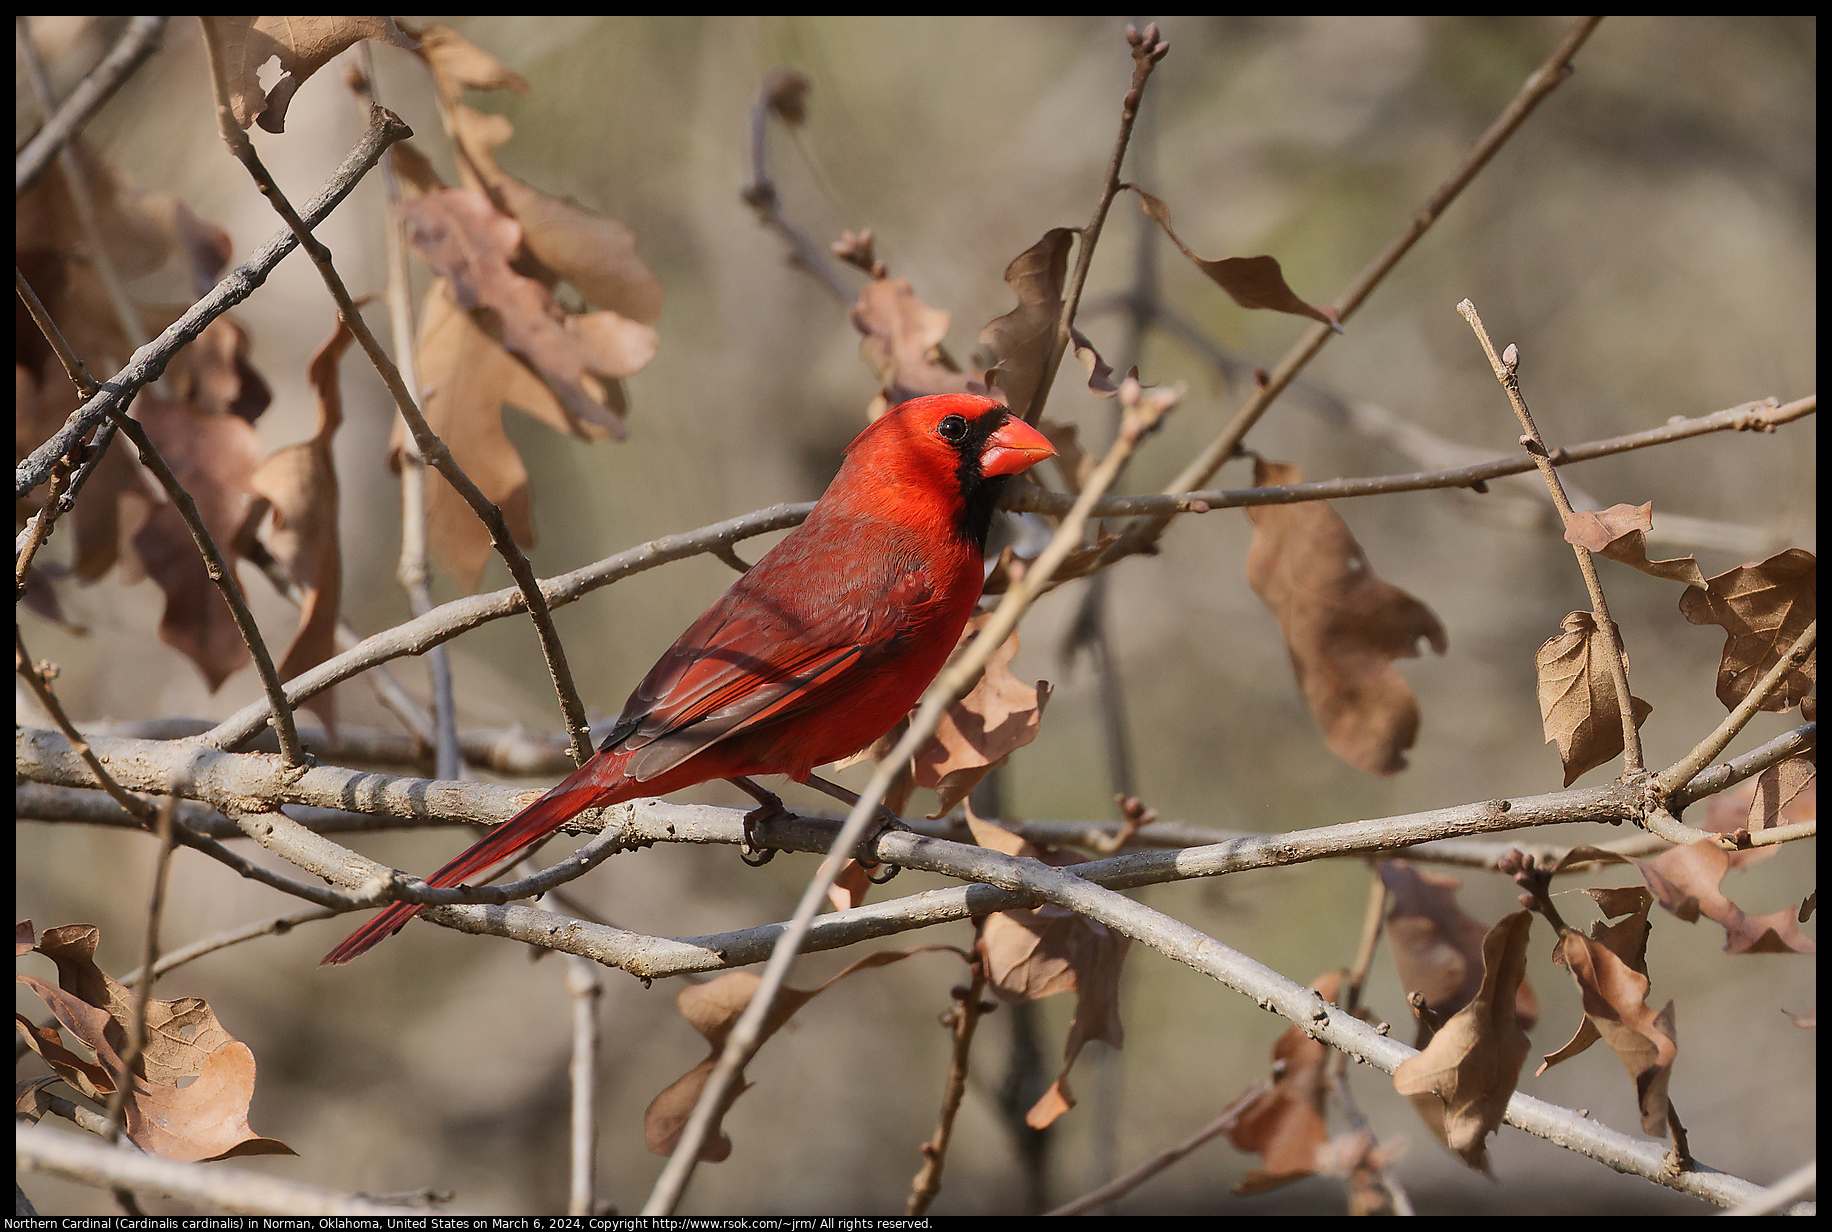 Northern Cardinal (Cardinalis cardinalis) in Norman, Oklahoma, United States on March 6, 2024